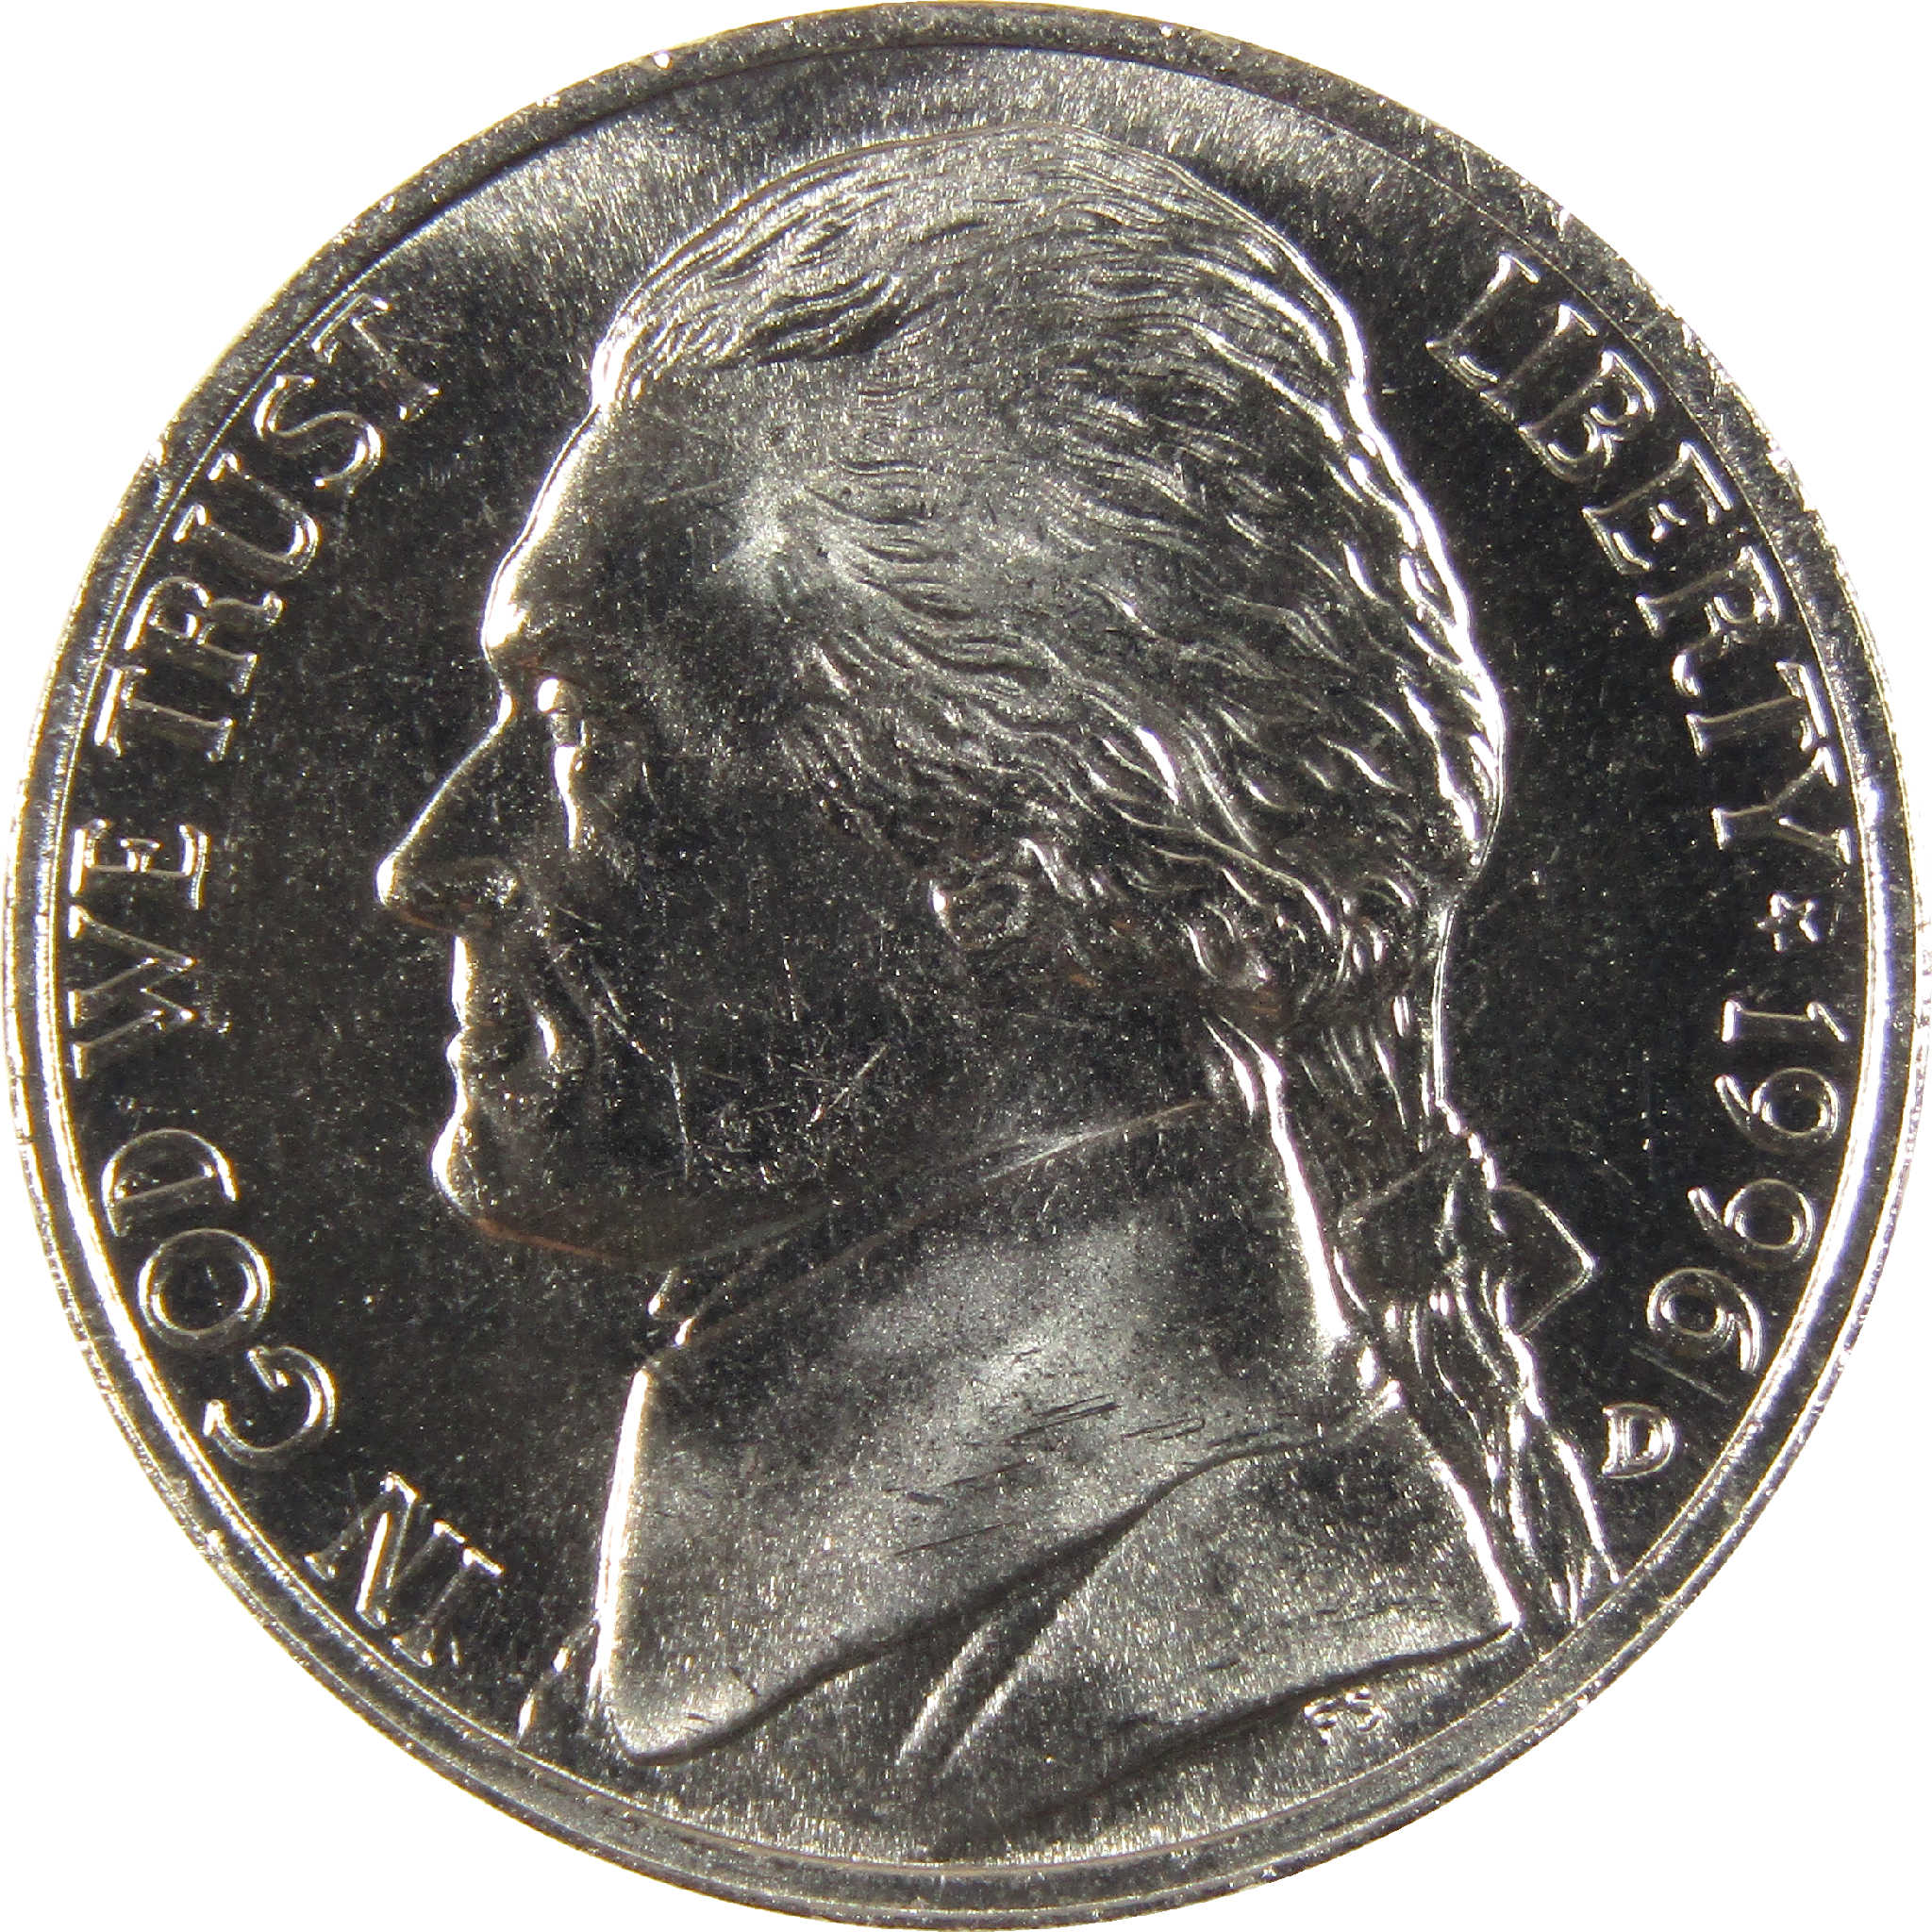 1996 D Jefferson Nickel Uncirculated 5c Coin